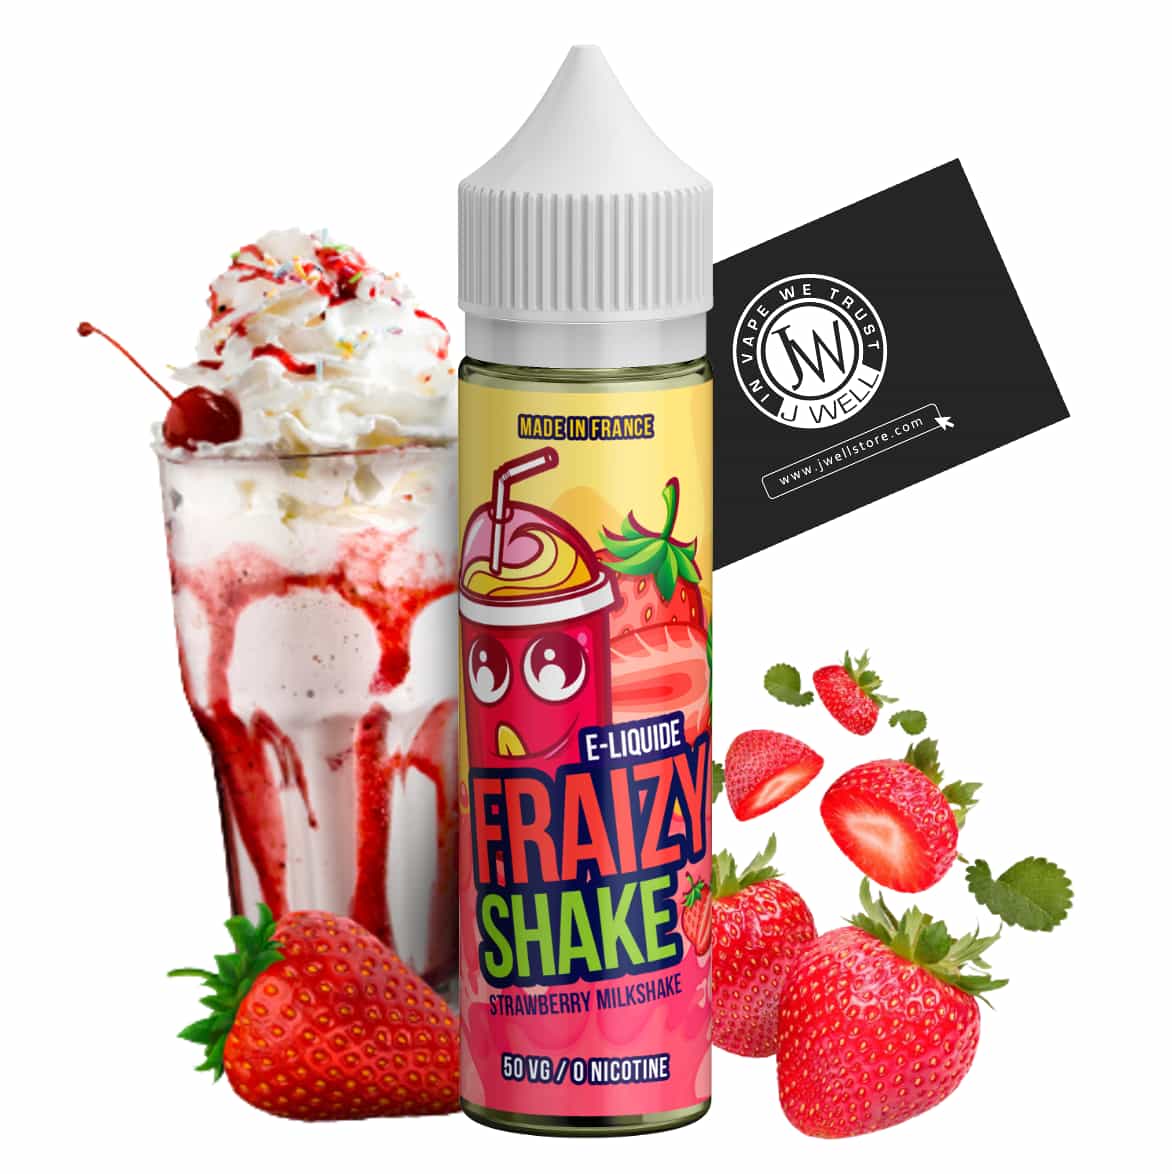 Image E liquide Fraizy Shake 50 ml Milkshake